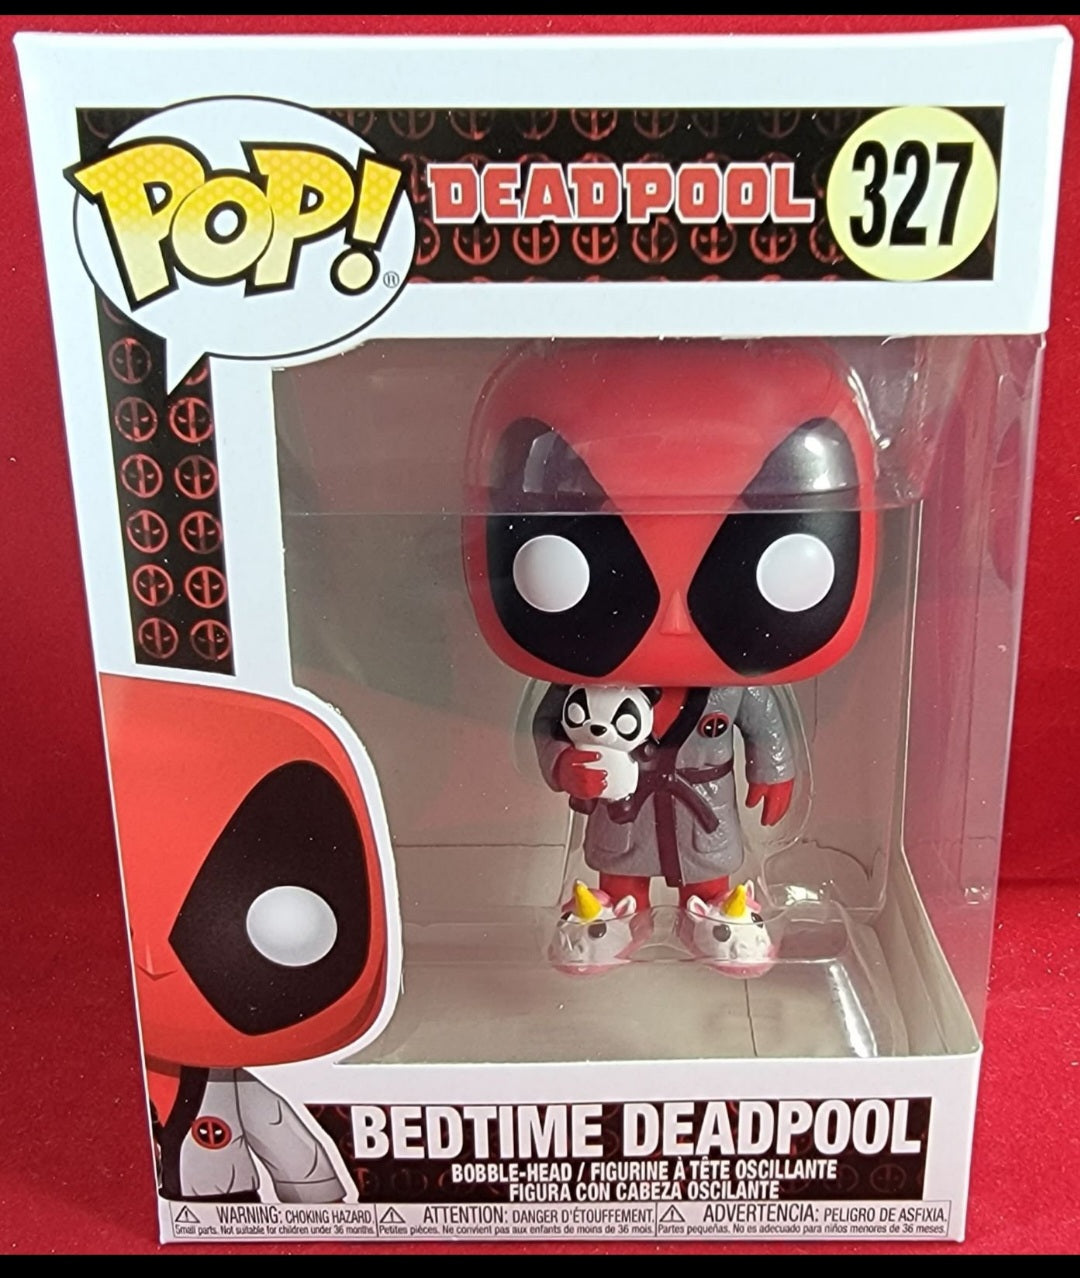 Bedtime Deadpool funko # 327 (nib)
With pop protector